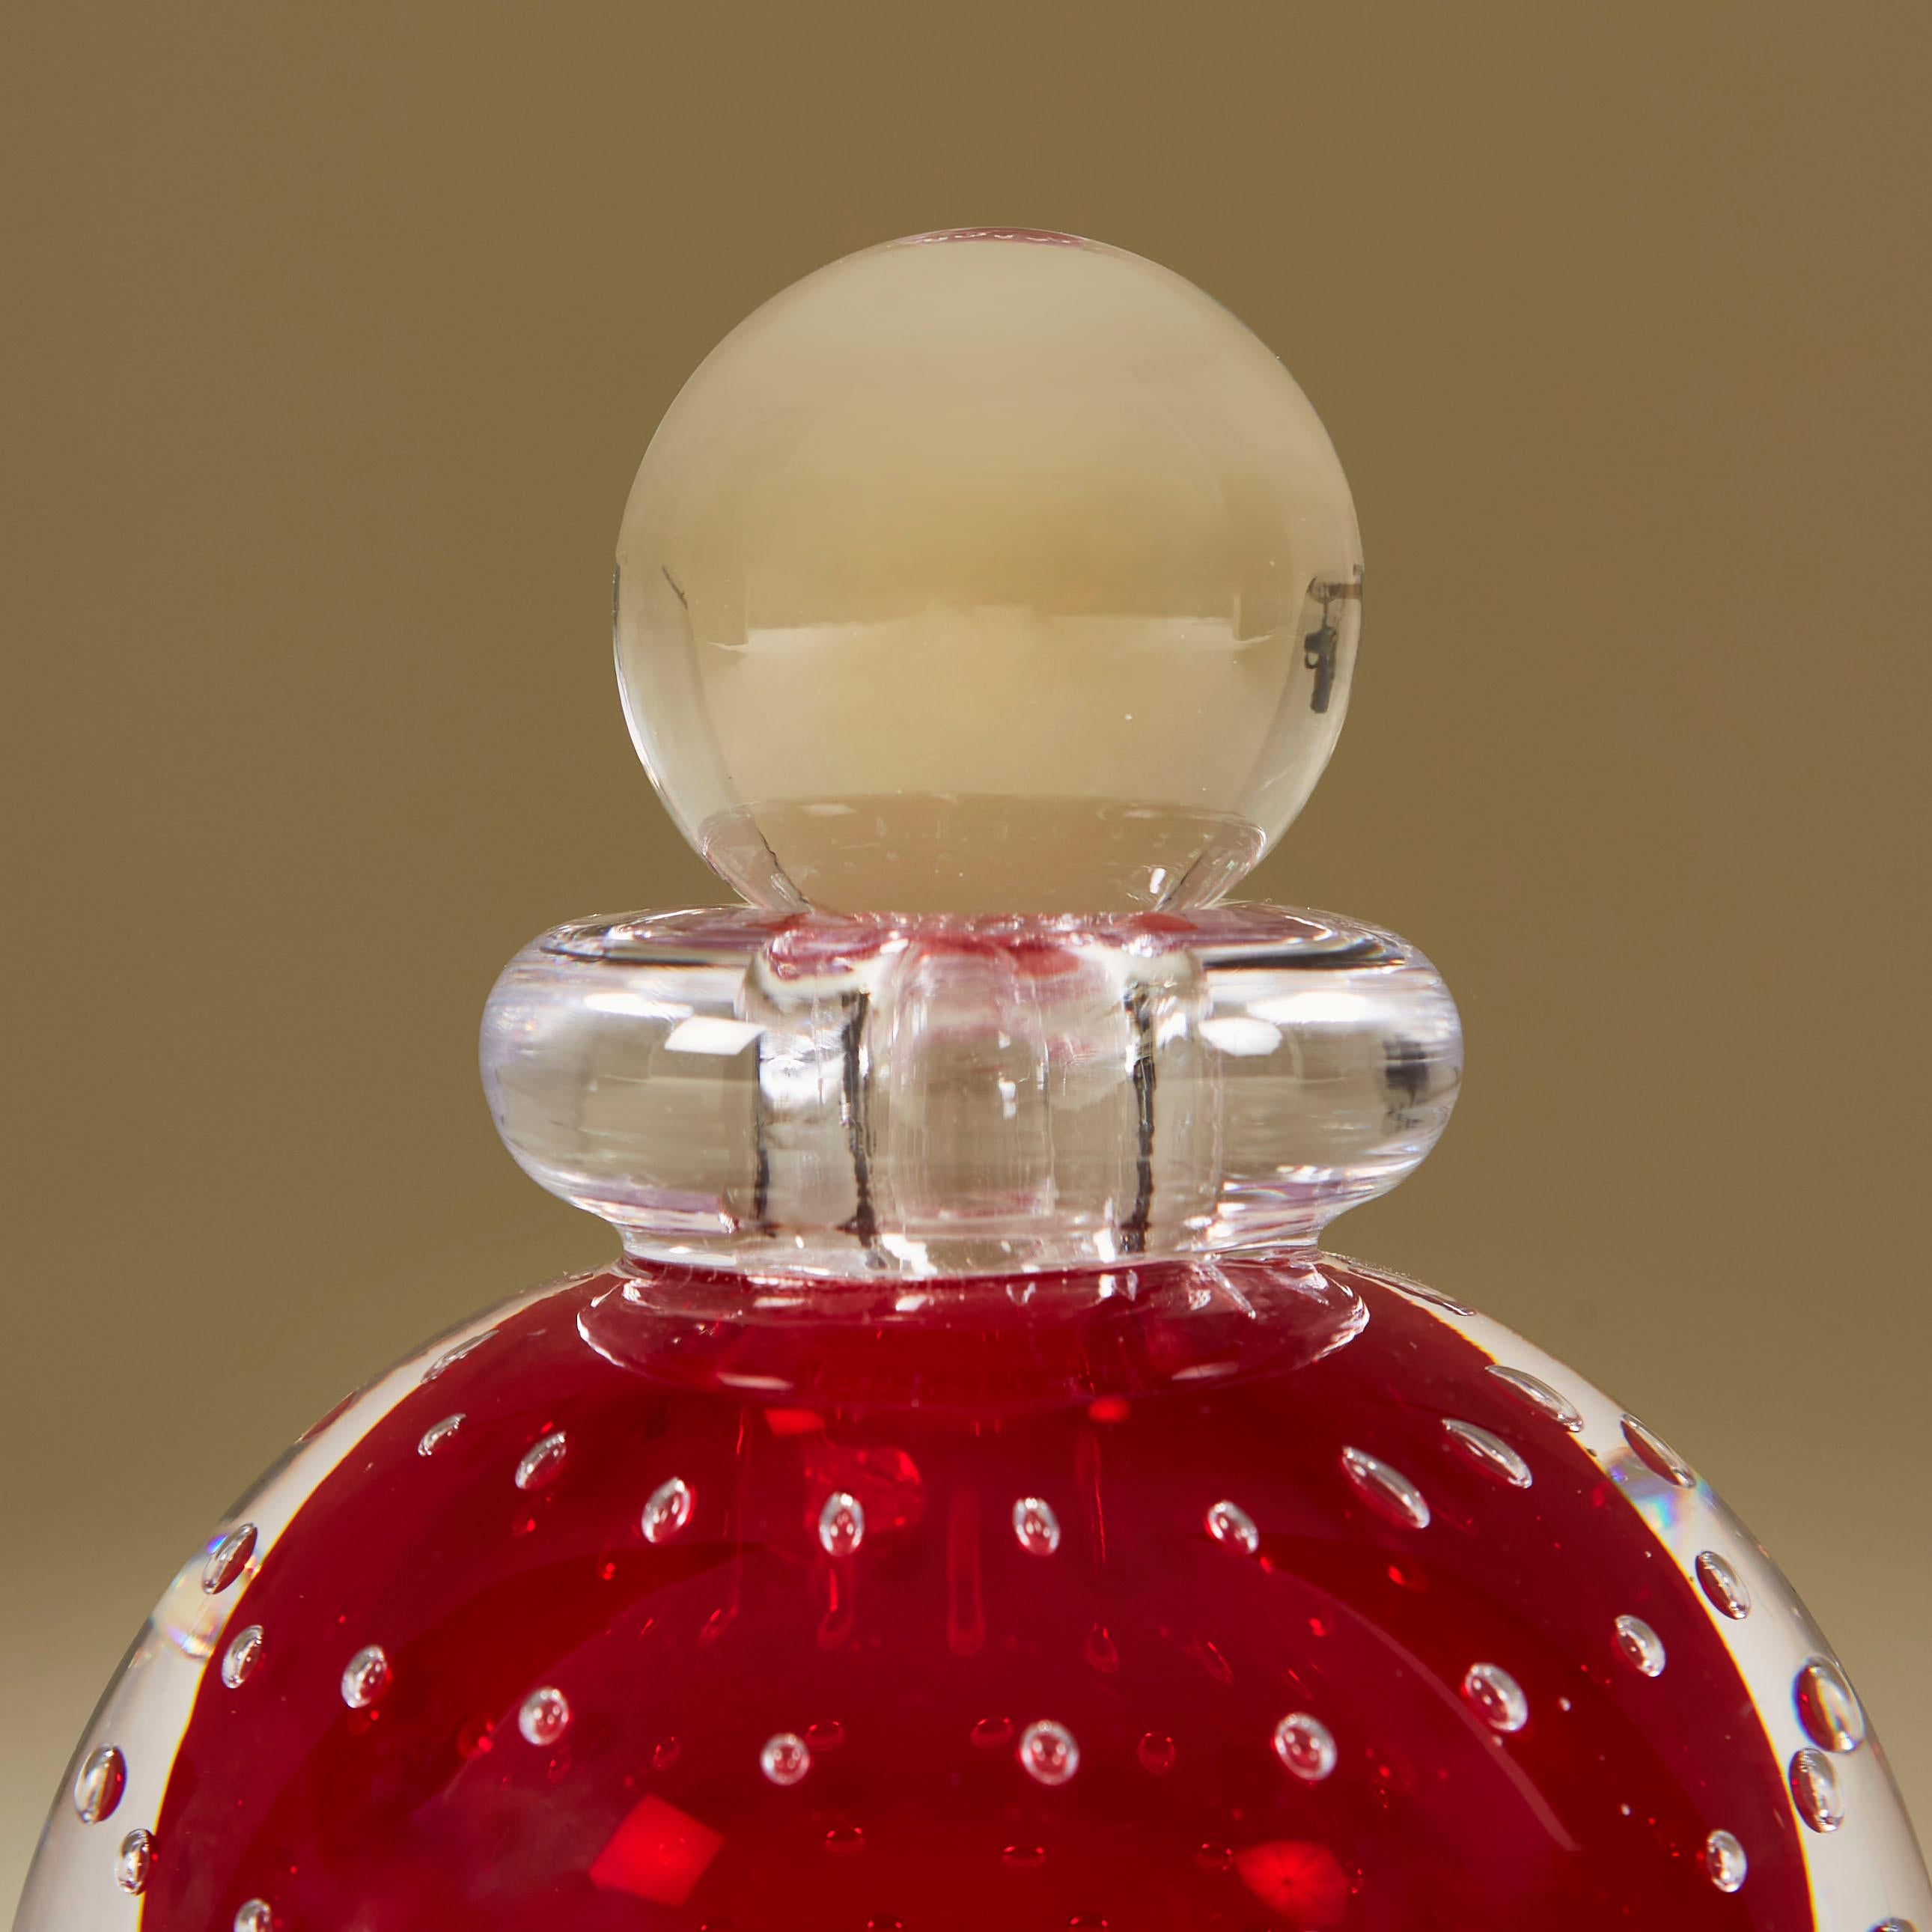 red ball perfume